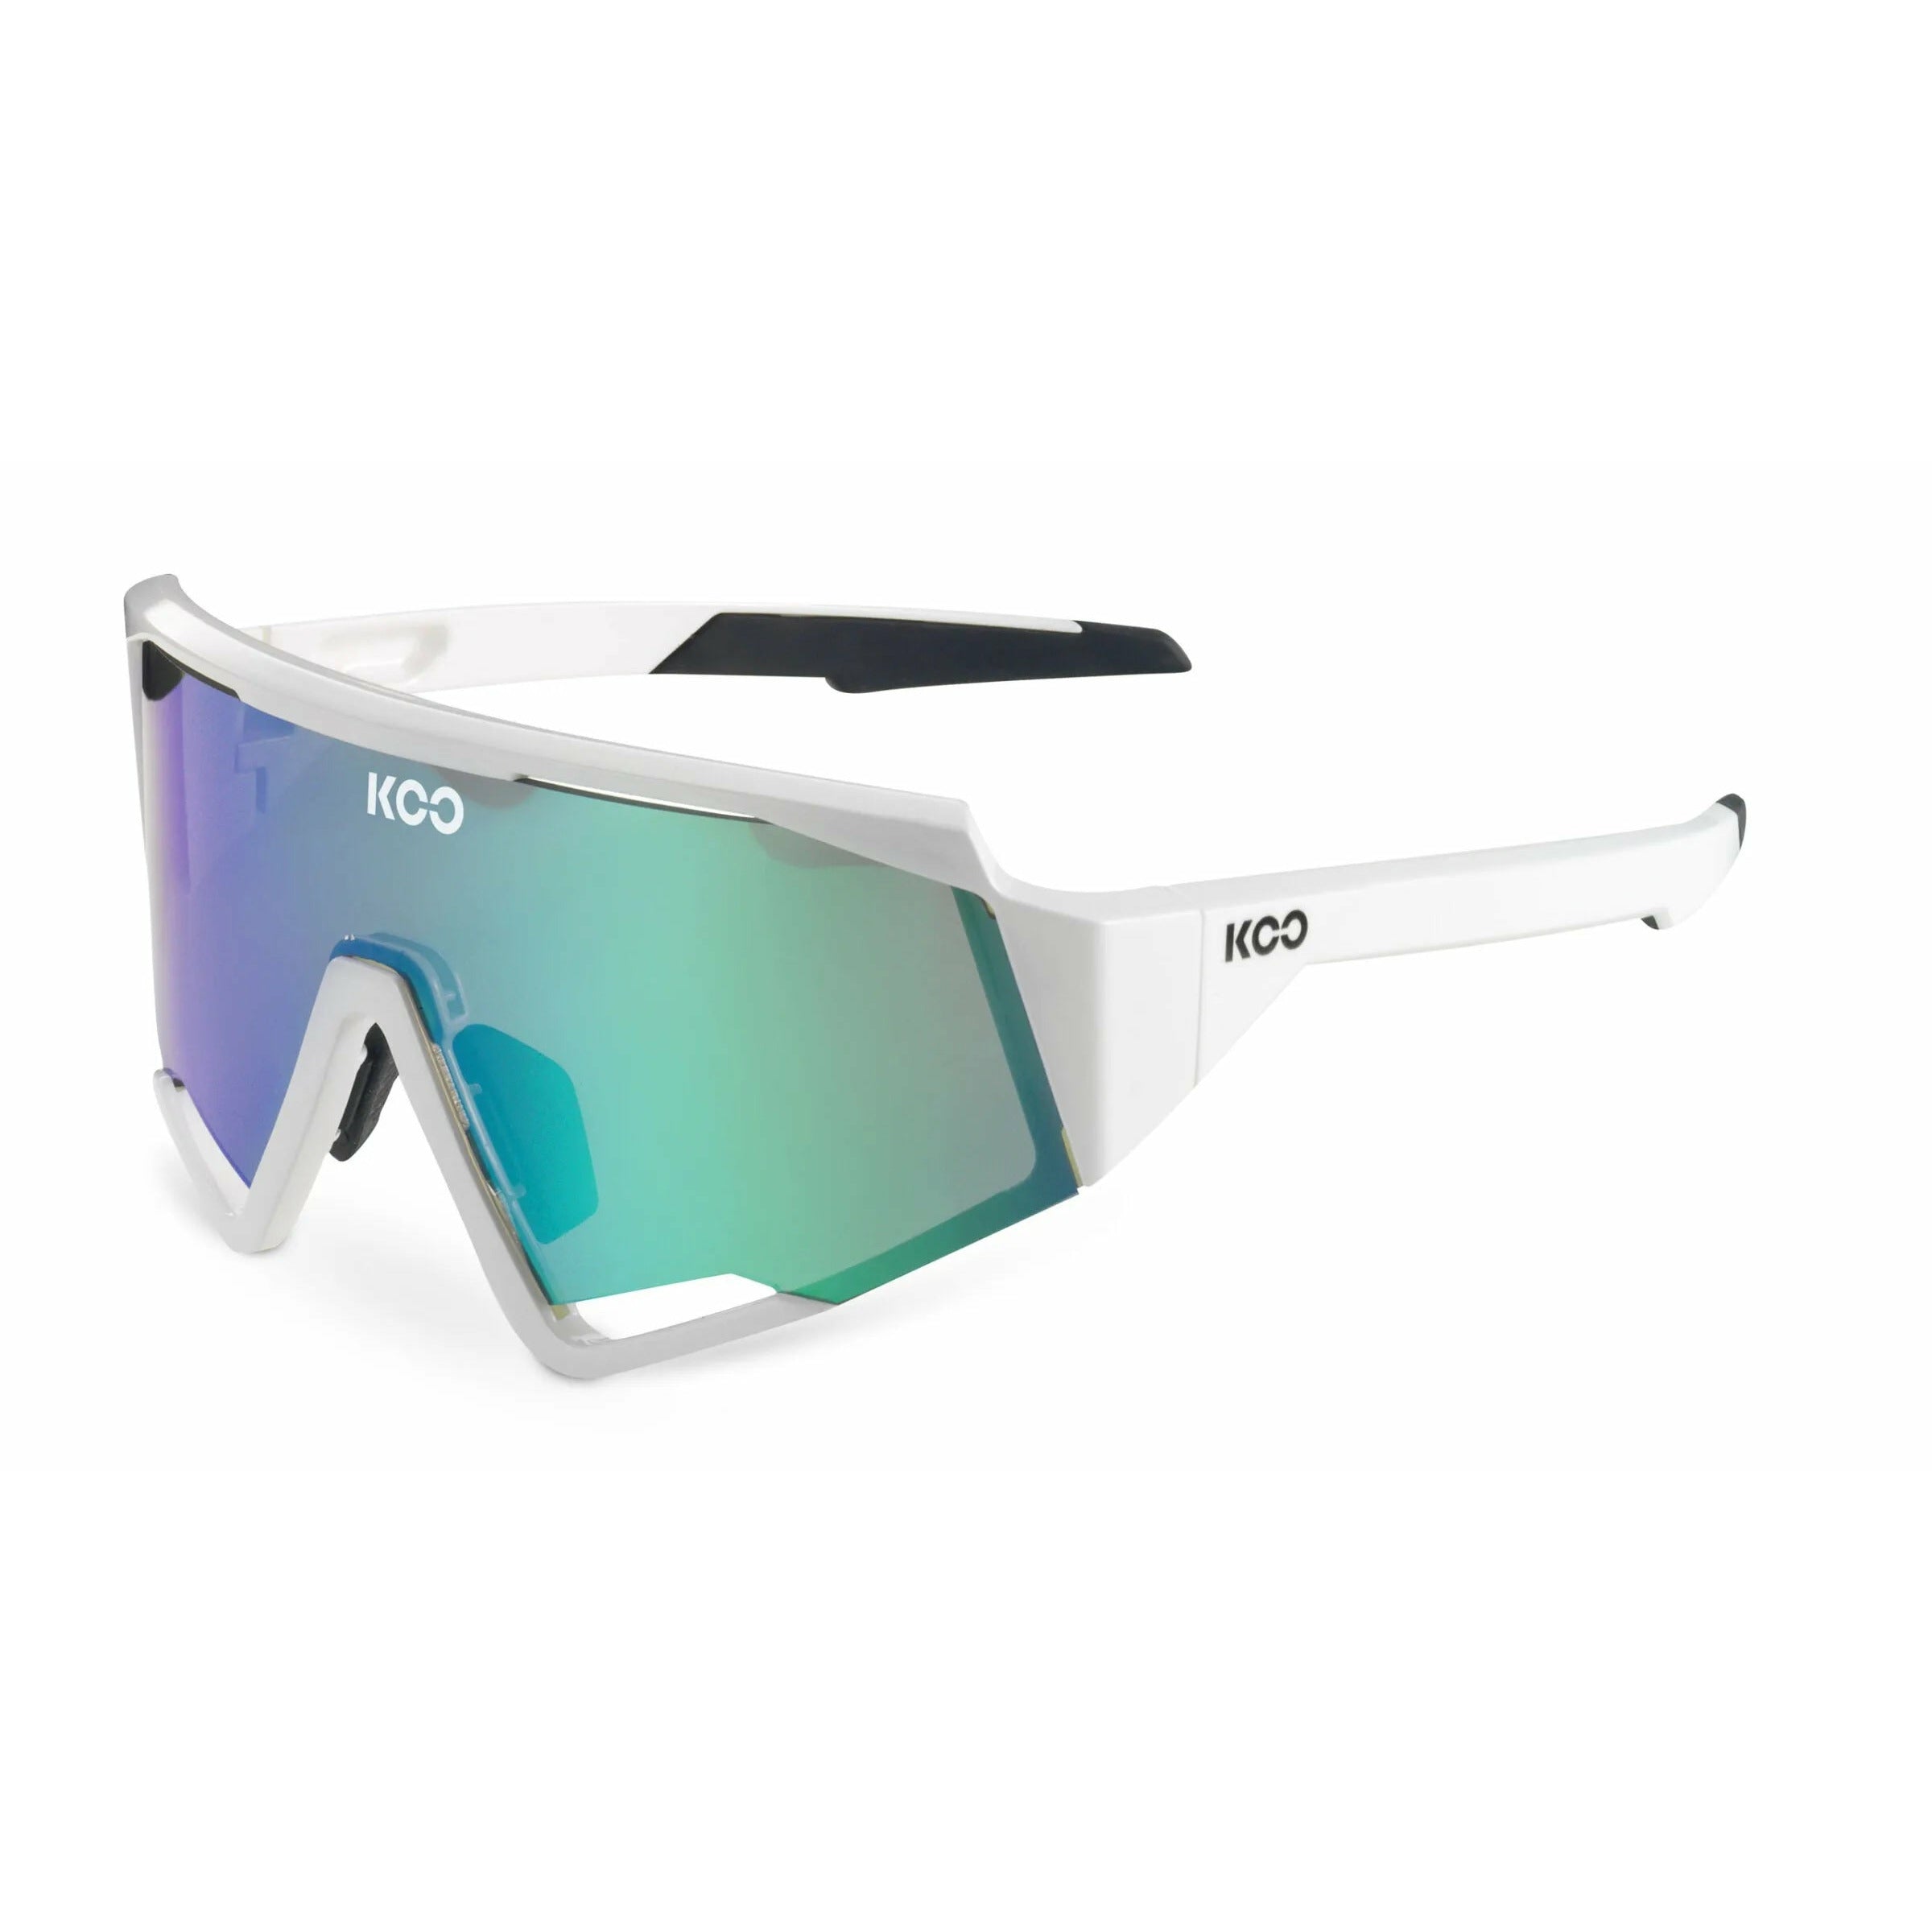 KOO Spectro Cycling Sunglasses